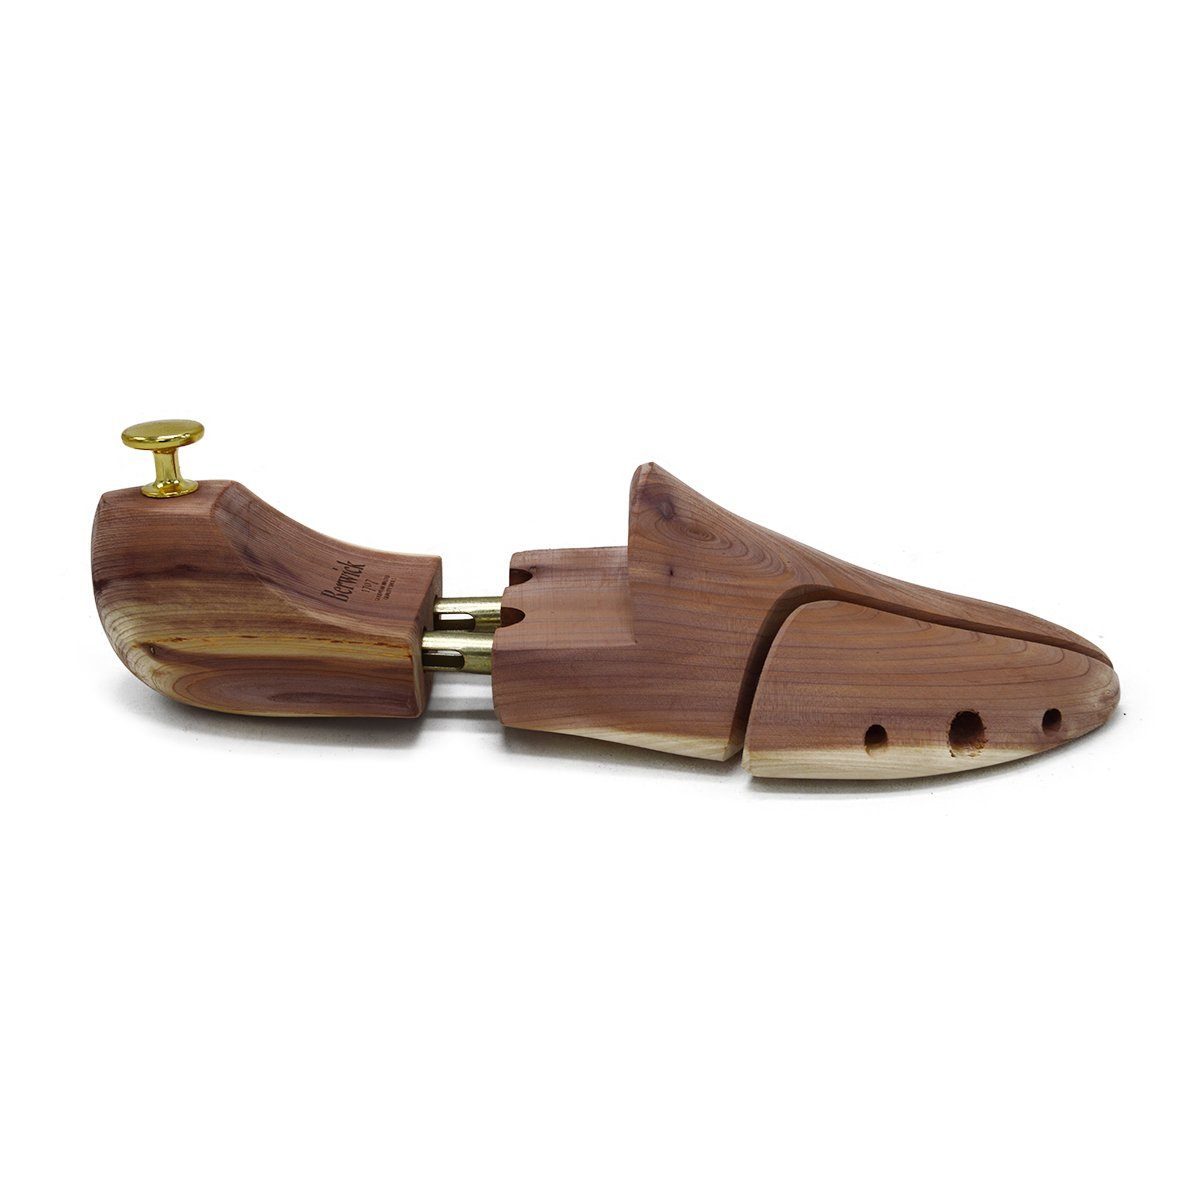 Berwick Cedar Shoe Trees – A Fine Pair of Shoes